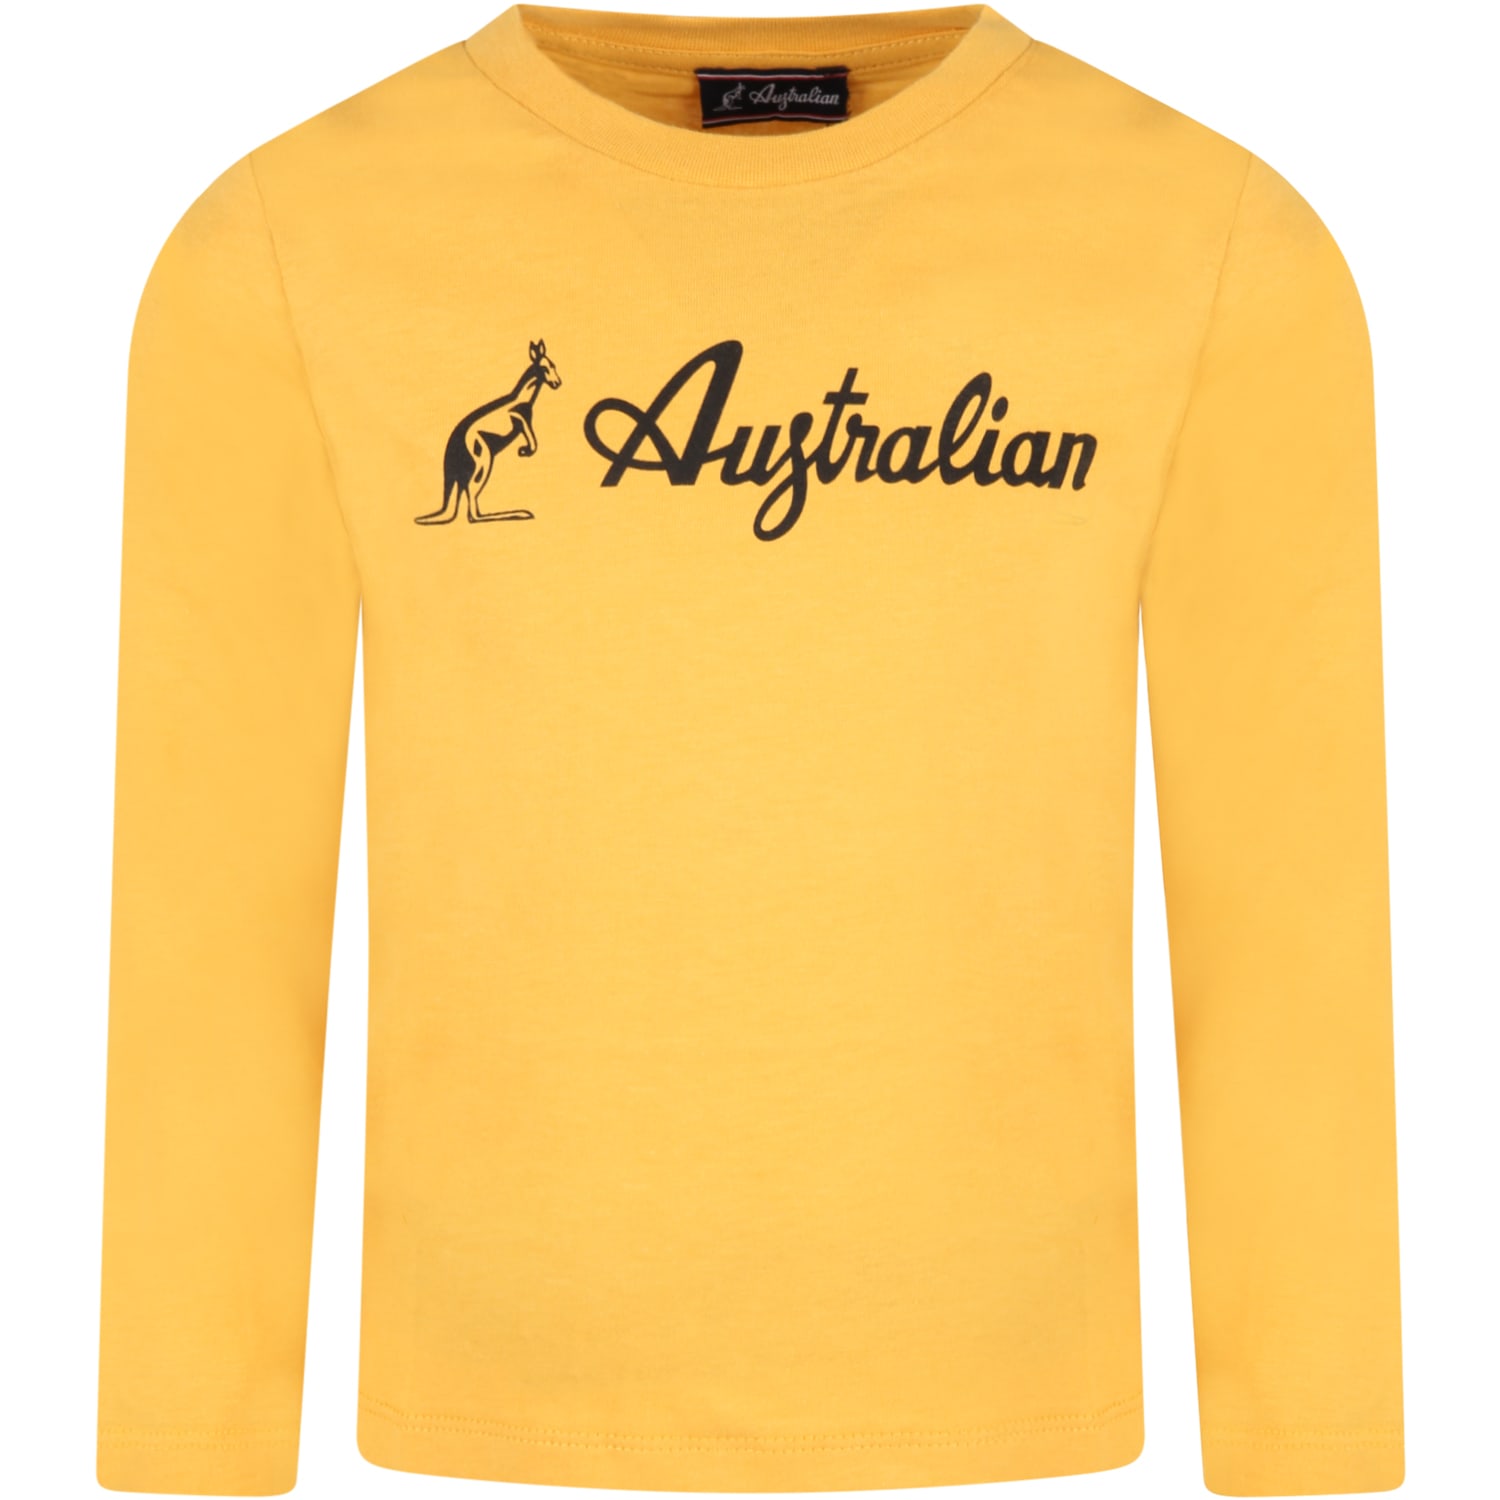 Australian Yellow T-shirt For Boy With Logo